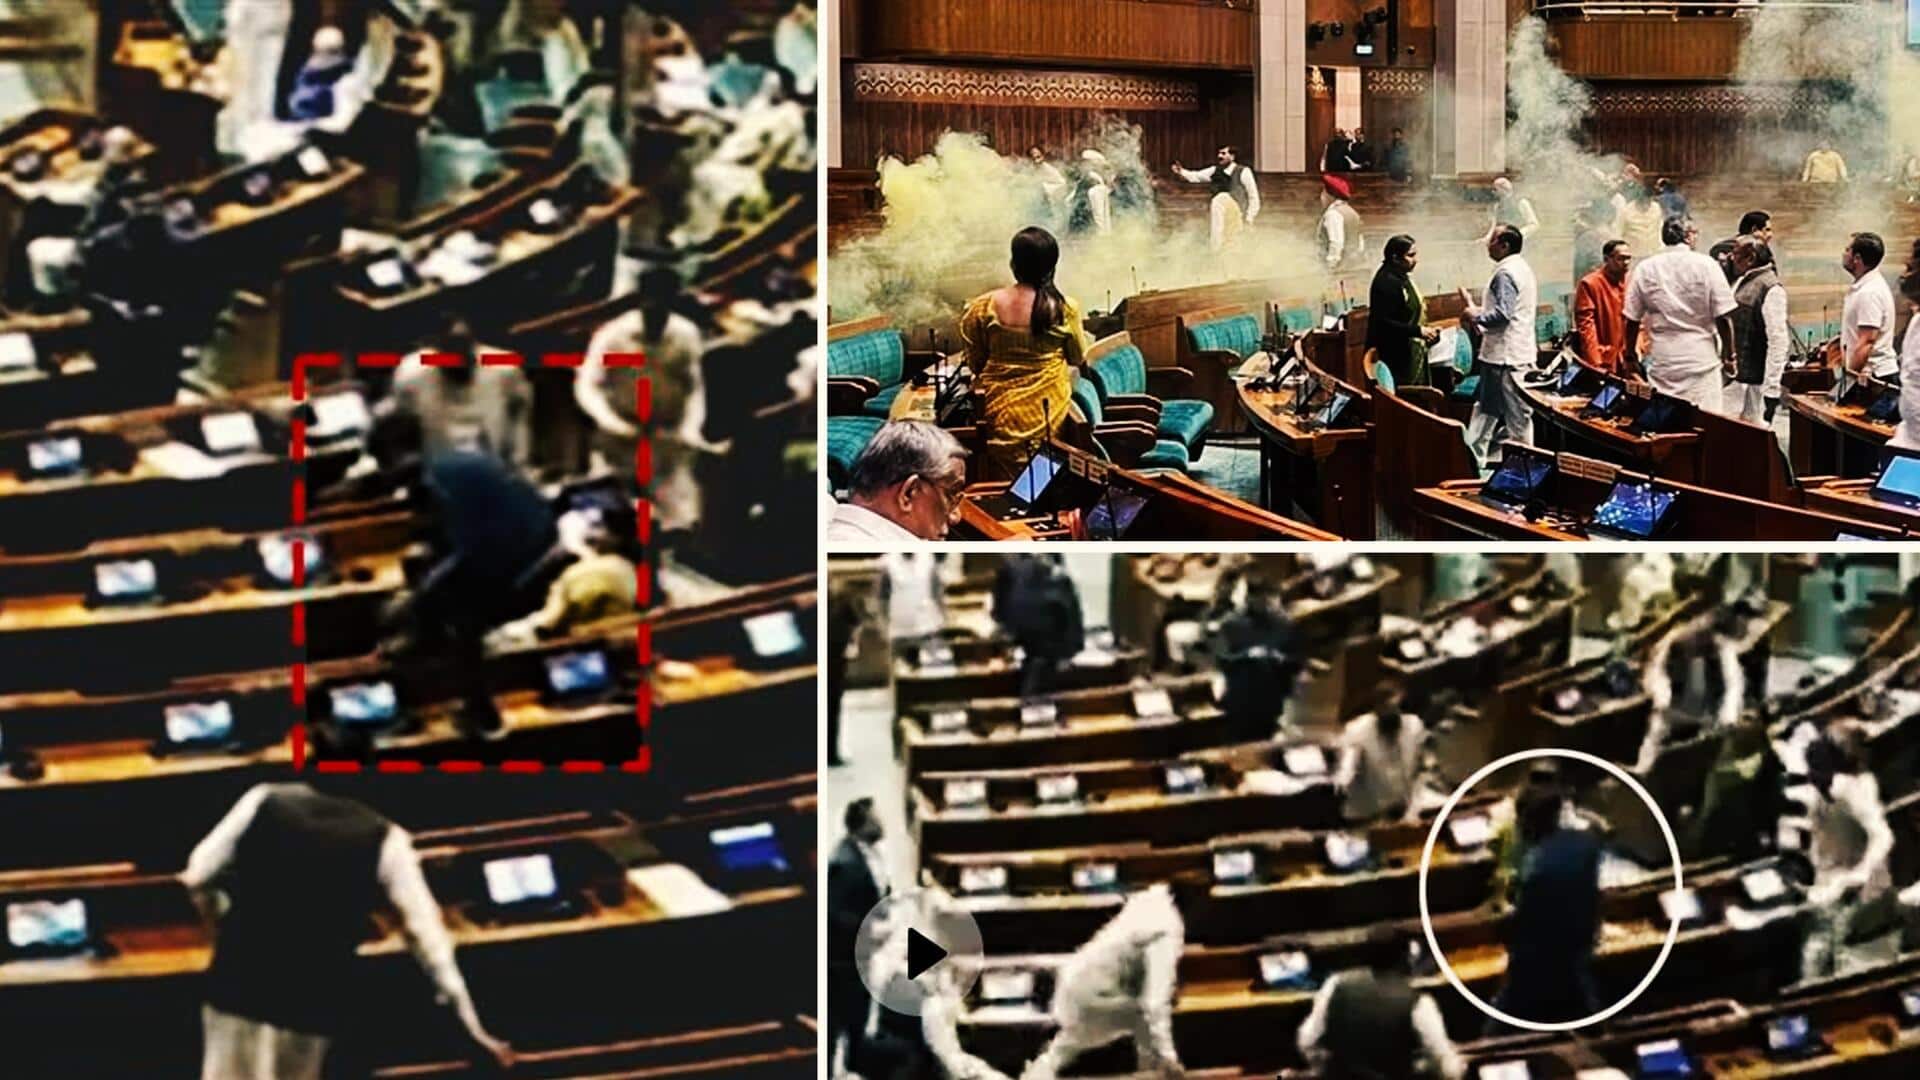 Parliament breach brings security protocols under scrutiny